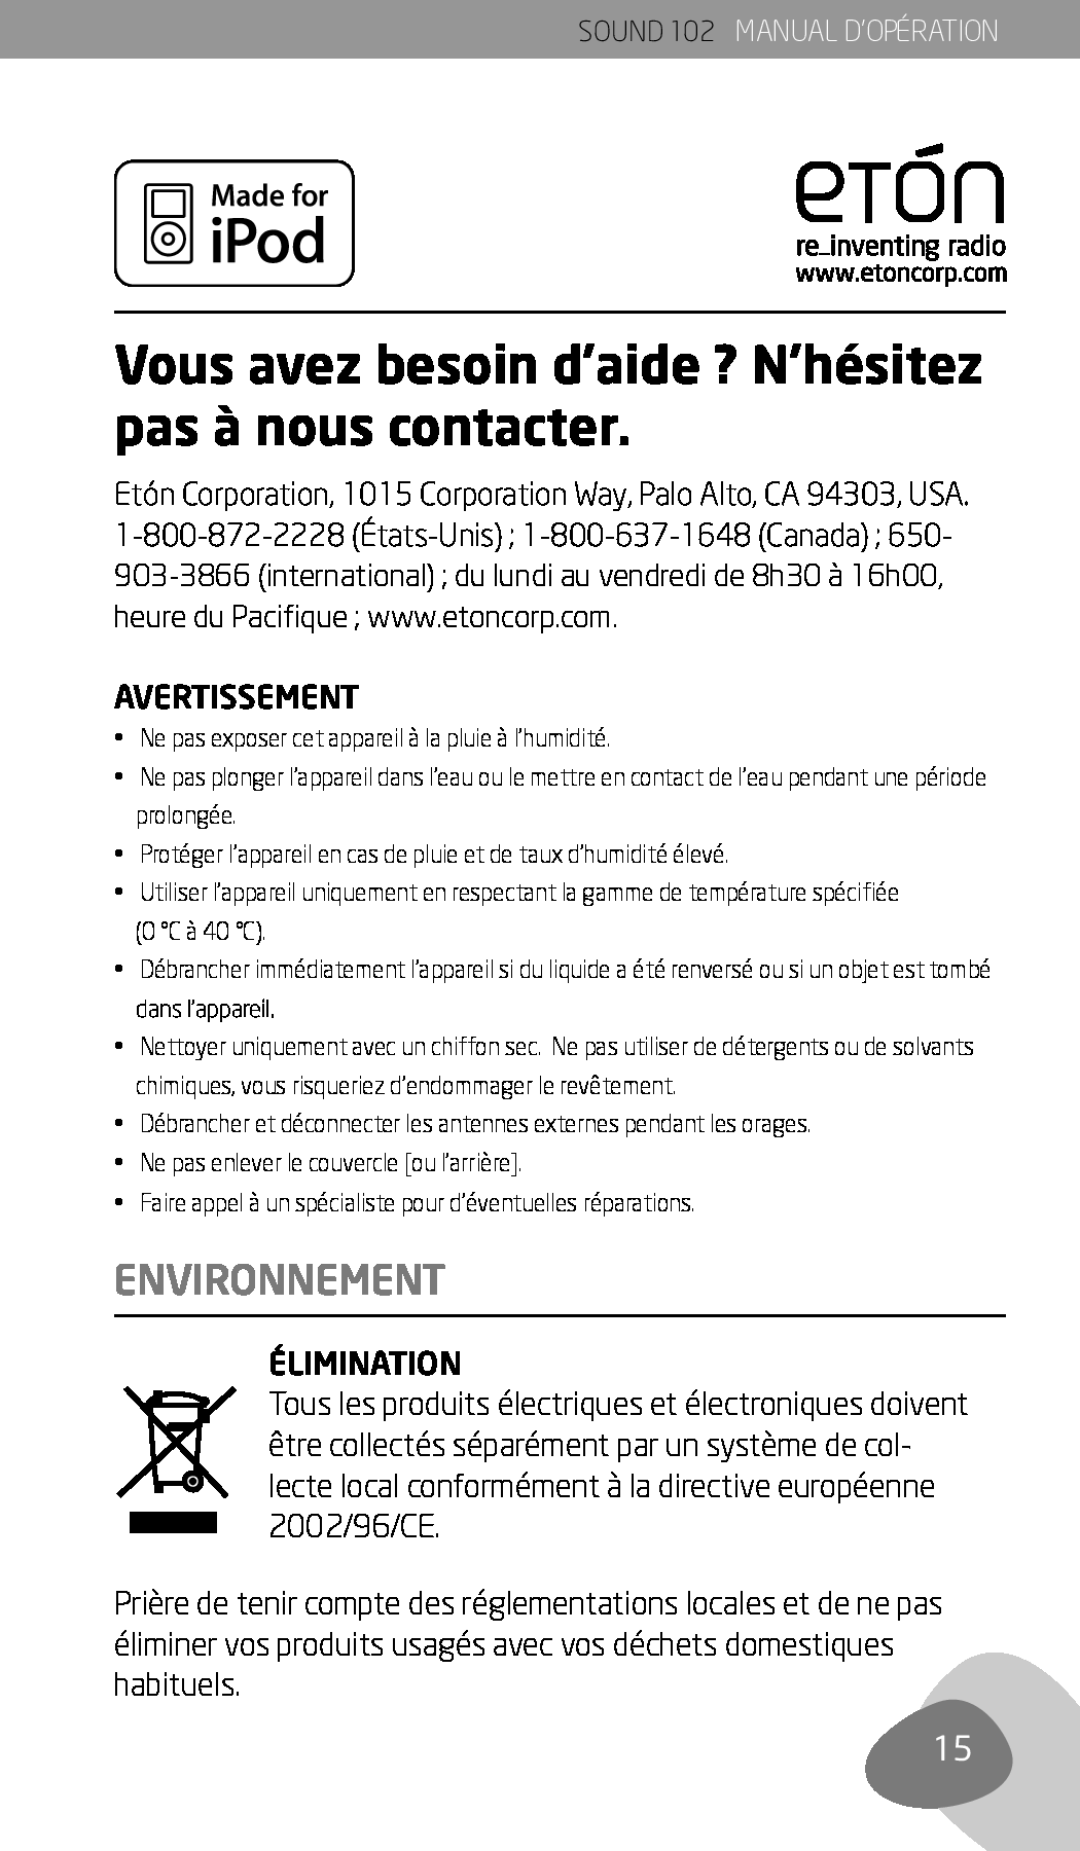 Eton owner manual Environnement, Avertissement, Élimination, SOUND 102 MANUAL D’OPÉRATION 